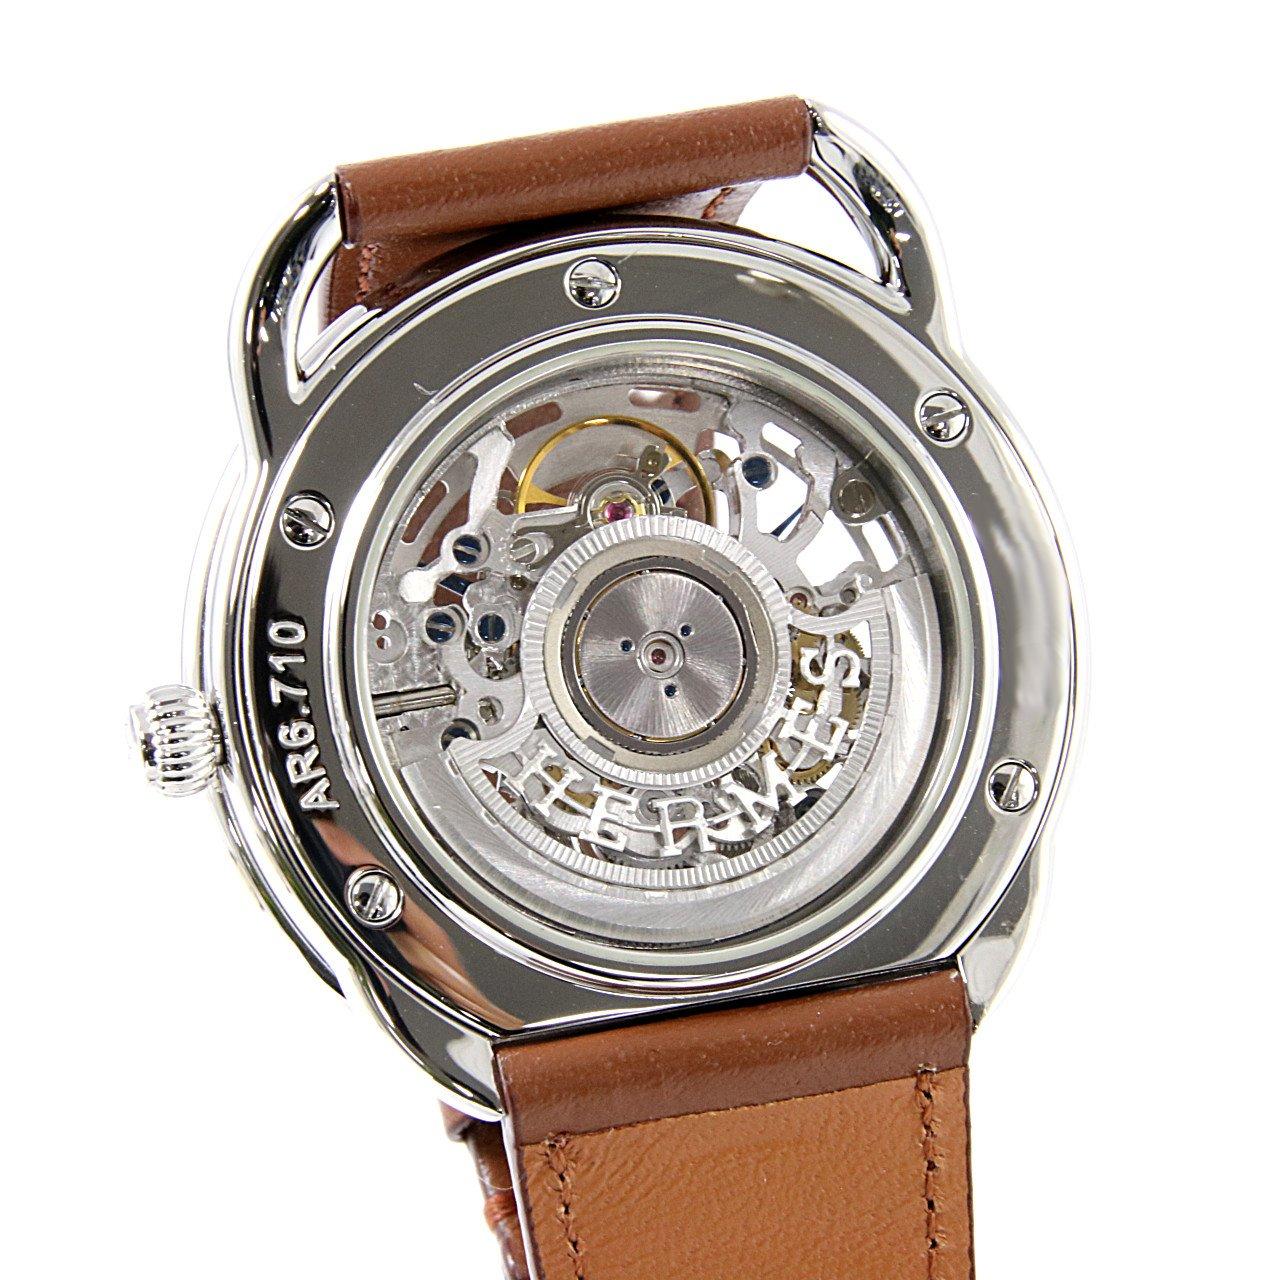 【115654】HERMES エルメス  AR6.710 アルソースケルトン スケルトンダイヤル SS/レザー 自動巻き 保証書 純正ボックス 腕時計 時計 WATCH メンズ 男性 男 紳士